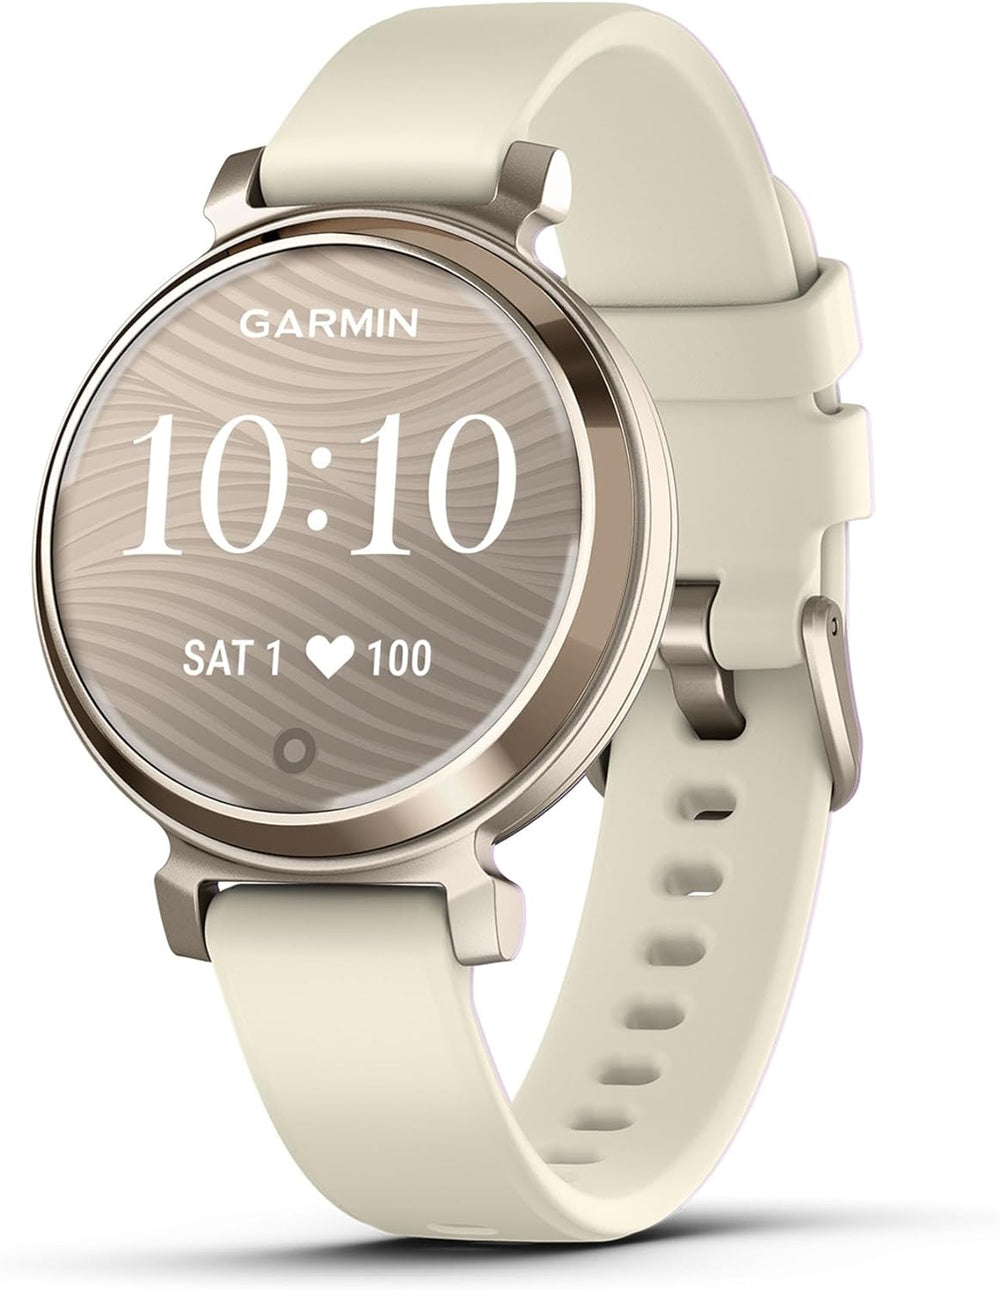 Garmin Lily 2 Sport Smartwatch in Cream Gold w/ Silicone Band